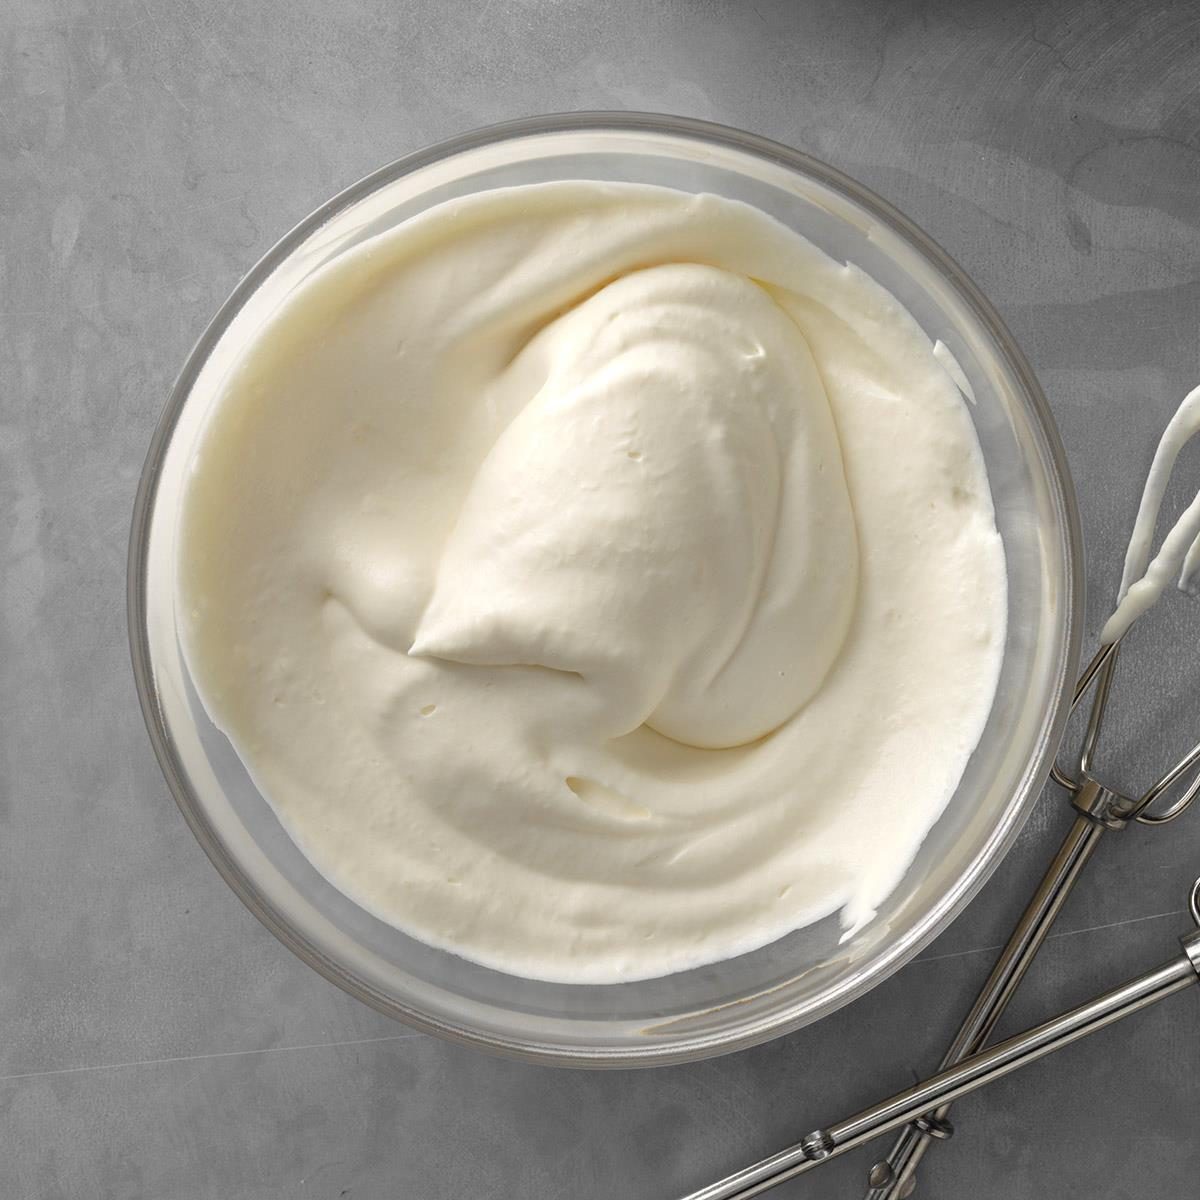 Sweetened Whipped Cream Recipe: How to Make It